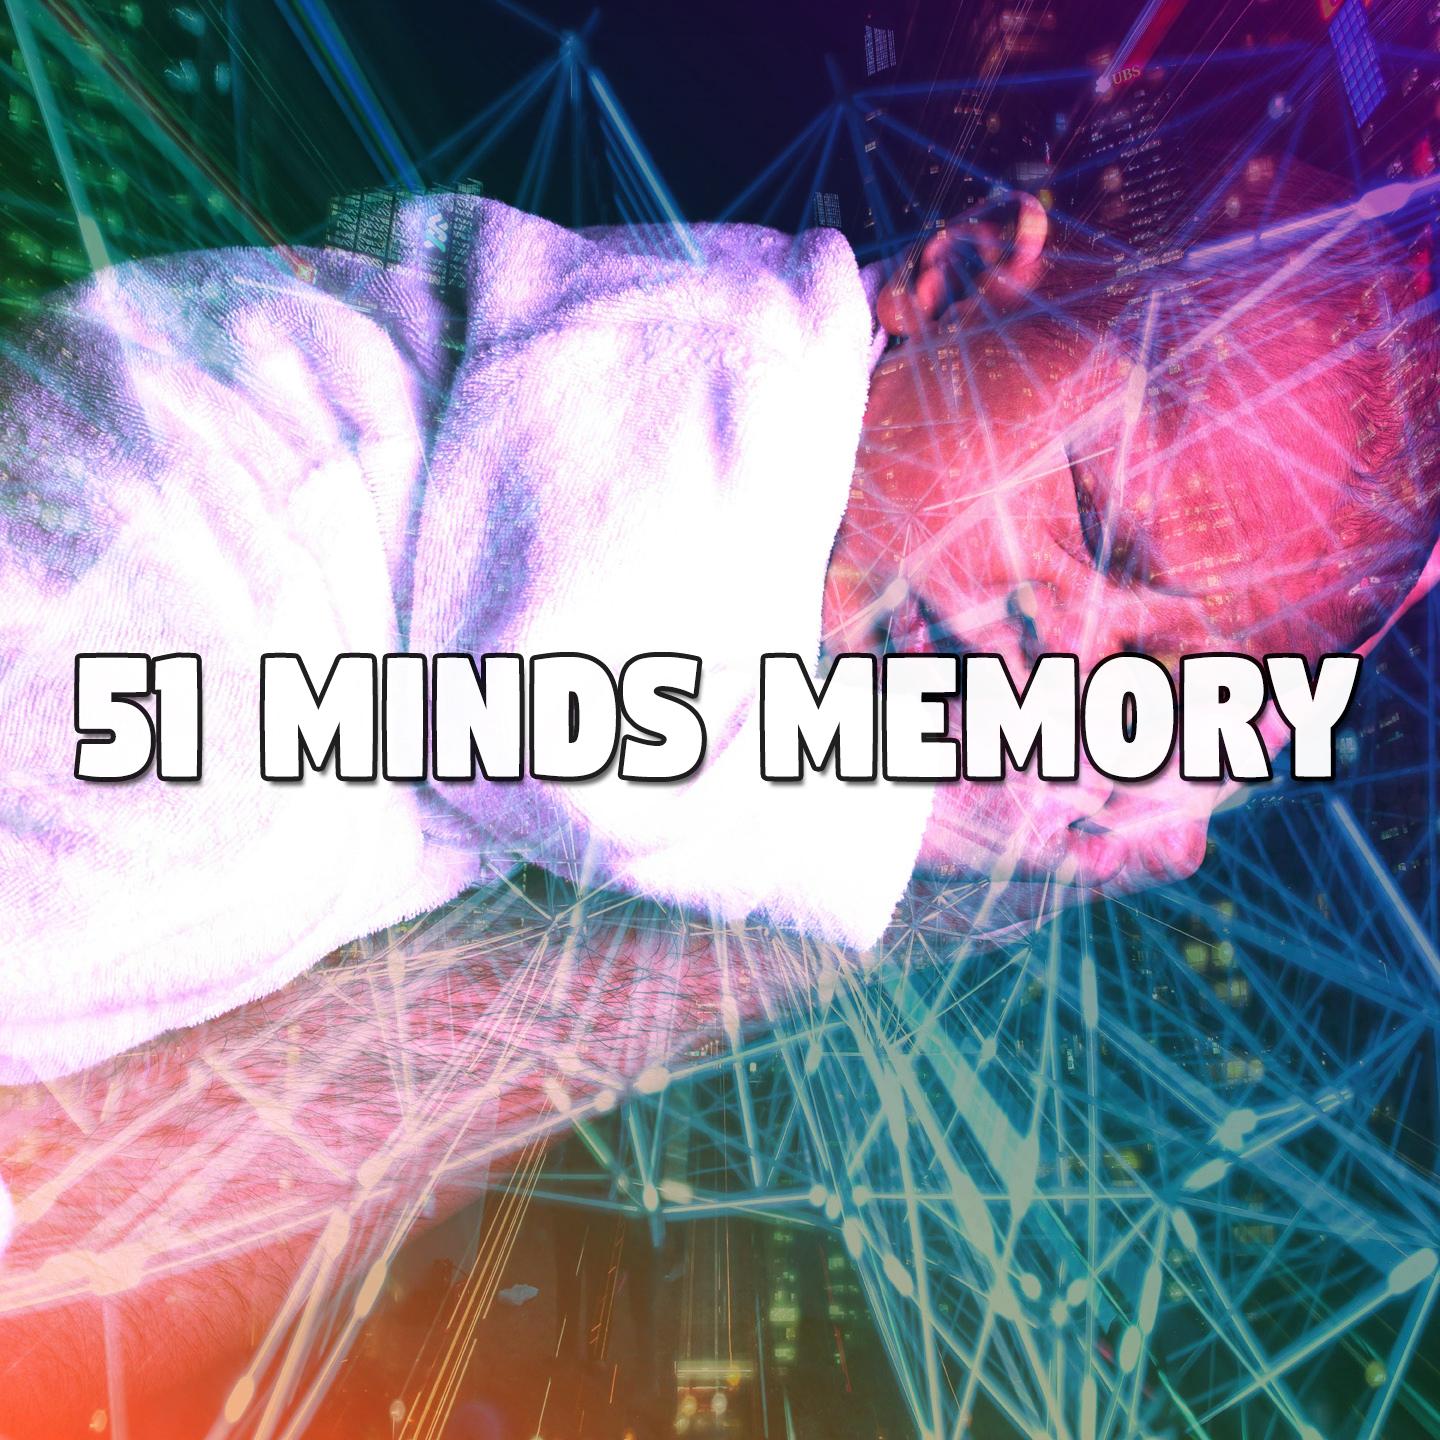 51 Minds Memory